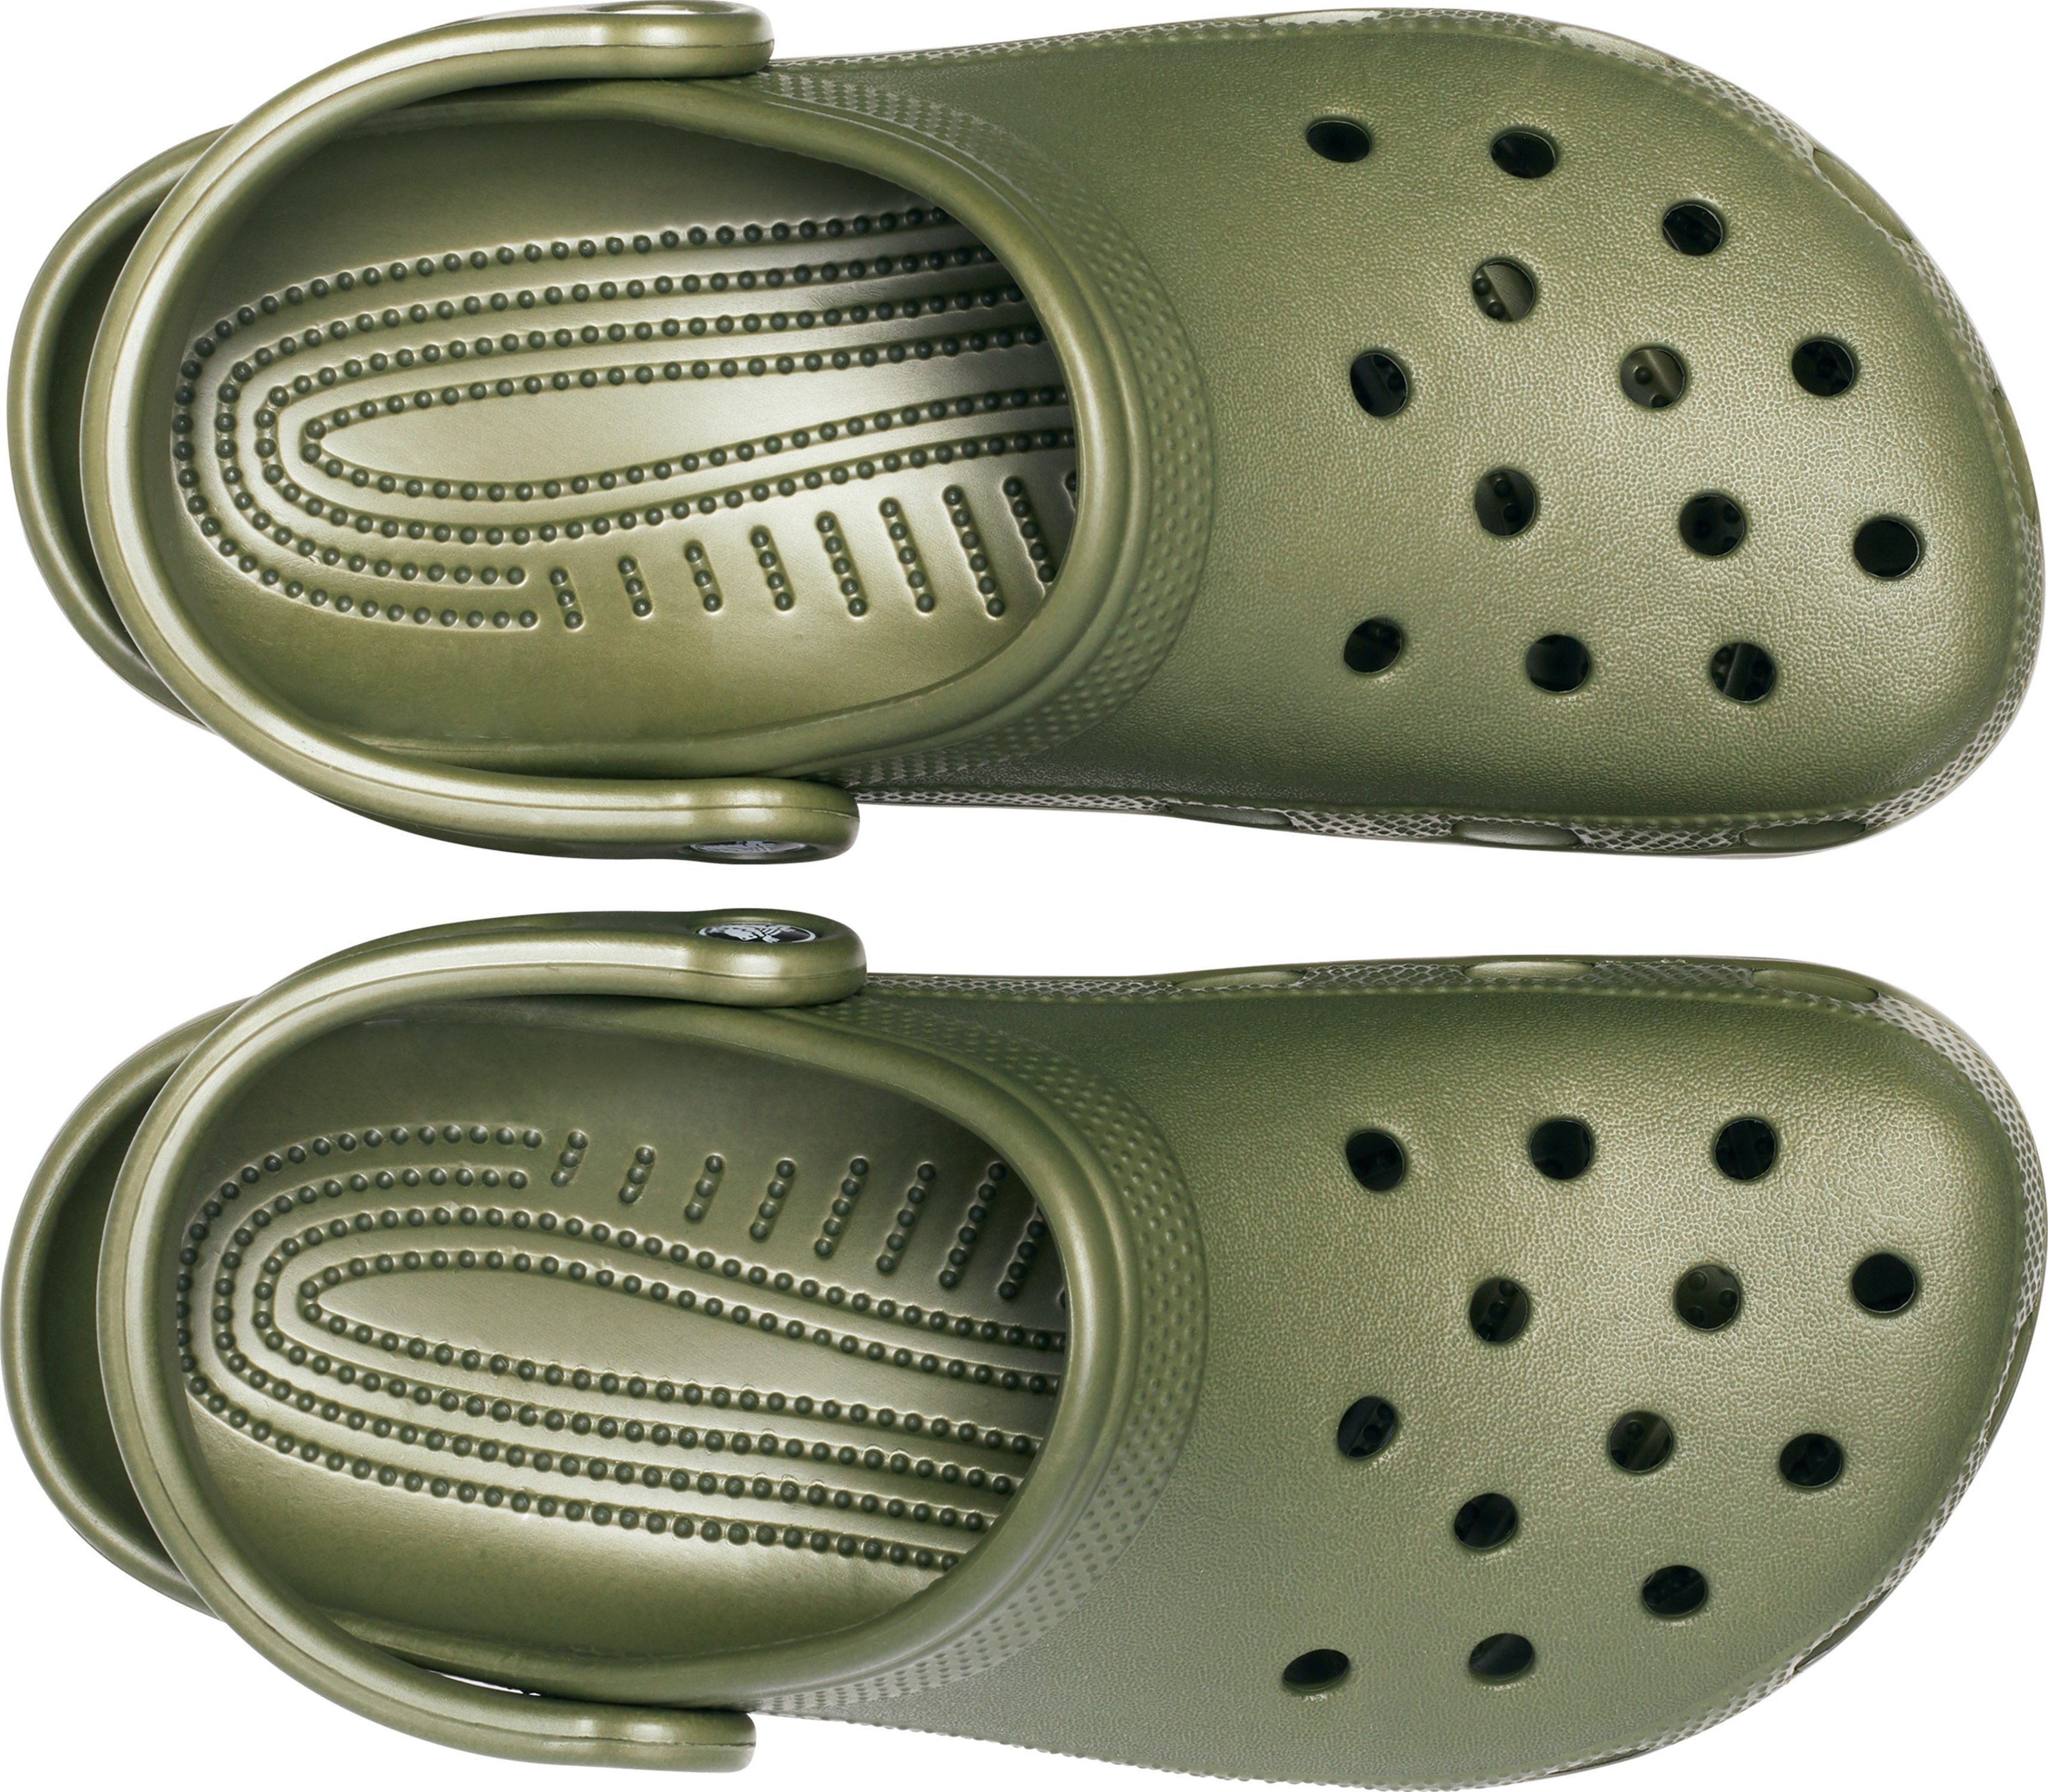 Clog Crocs khaki typischem mit Logo Classic